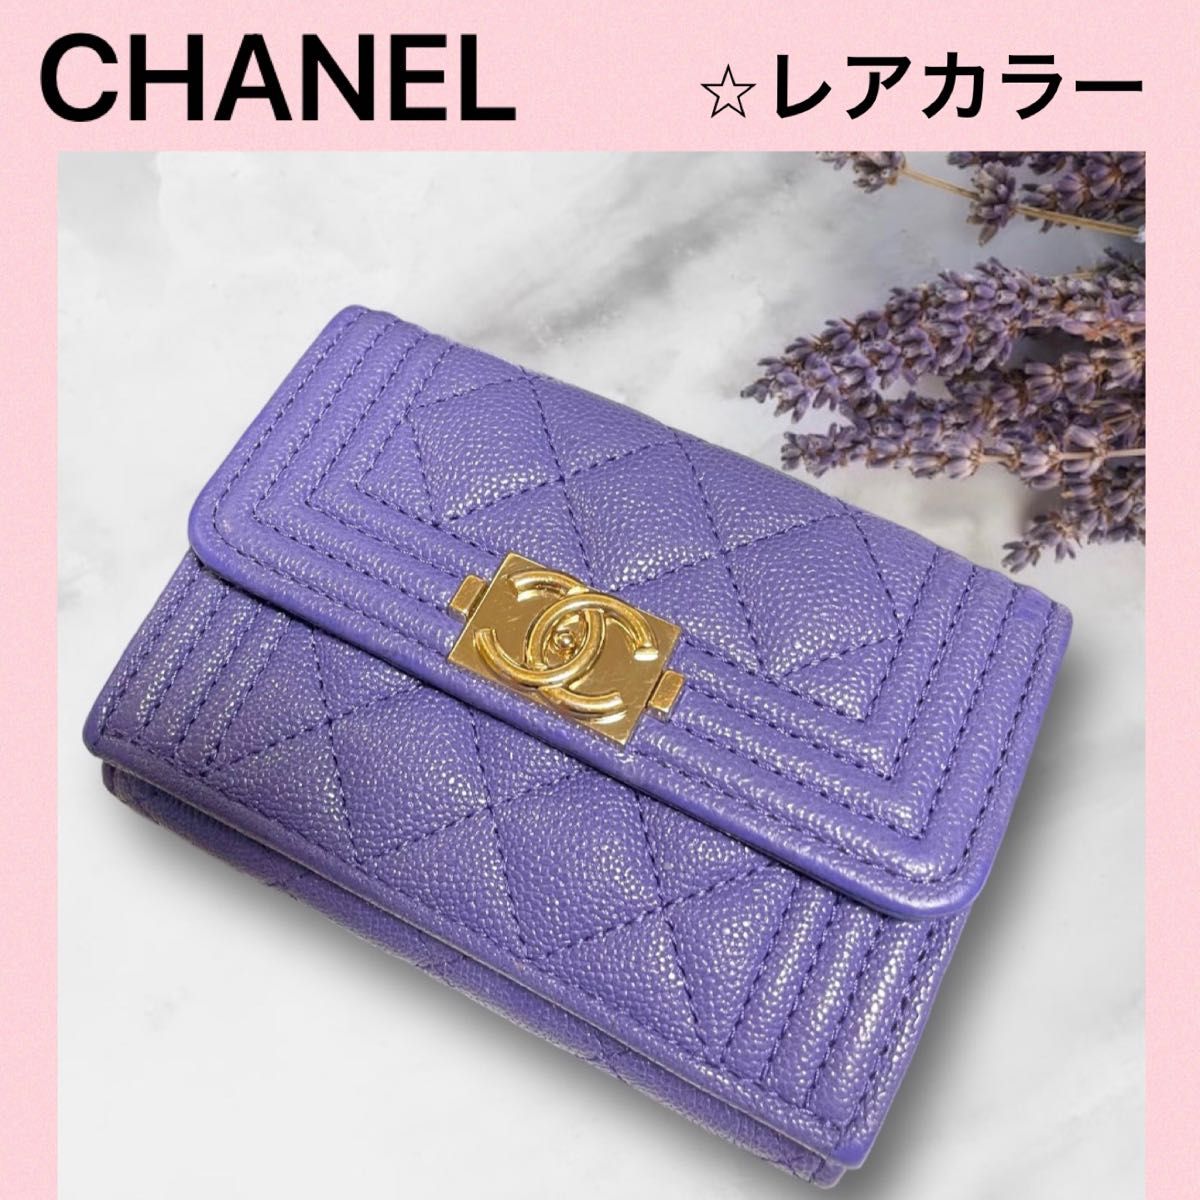 CHANEL 【レアカラー 極美品】ボーイシャネル 三つ折り財布 財布